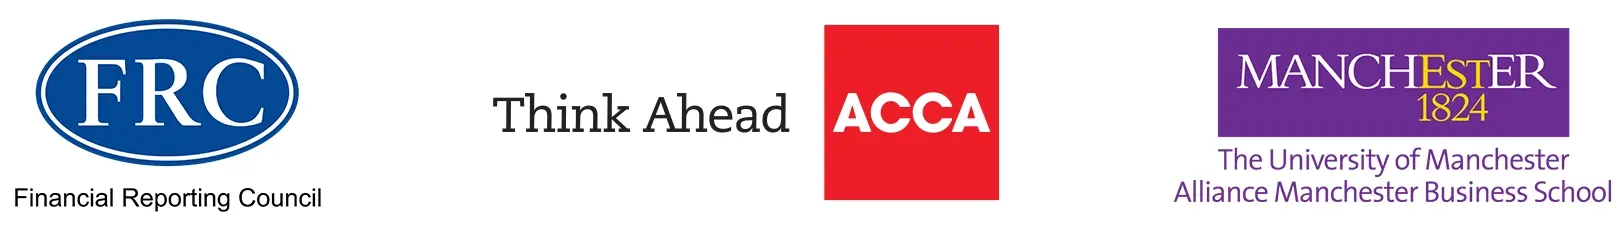 FRCA, ACCA and AMBS logos